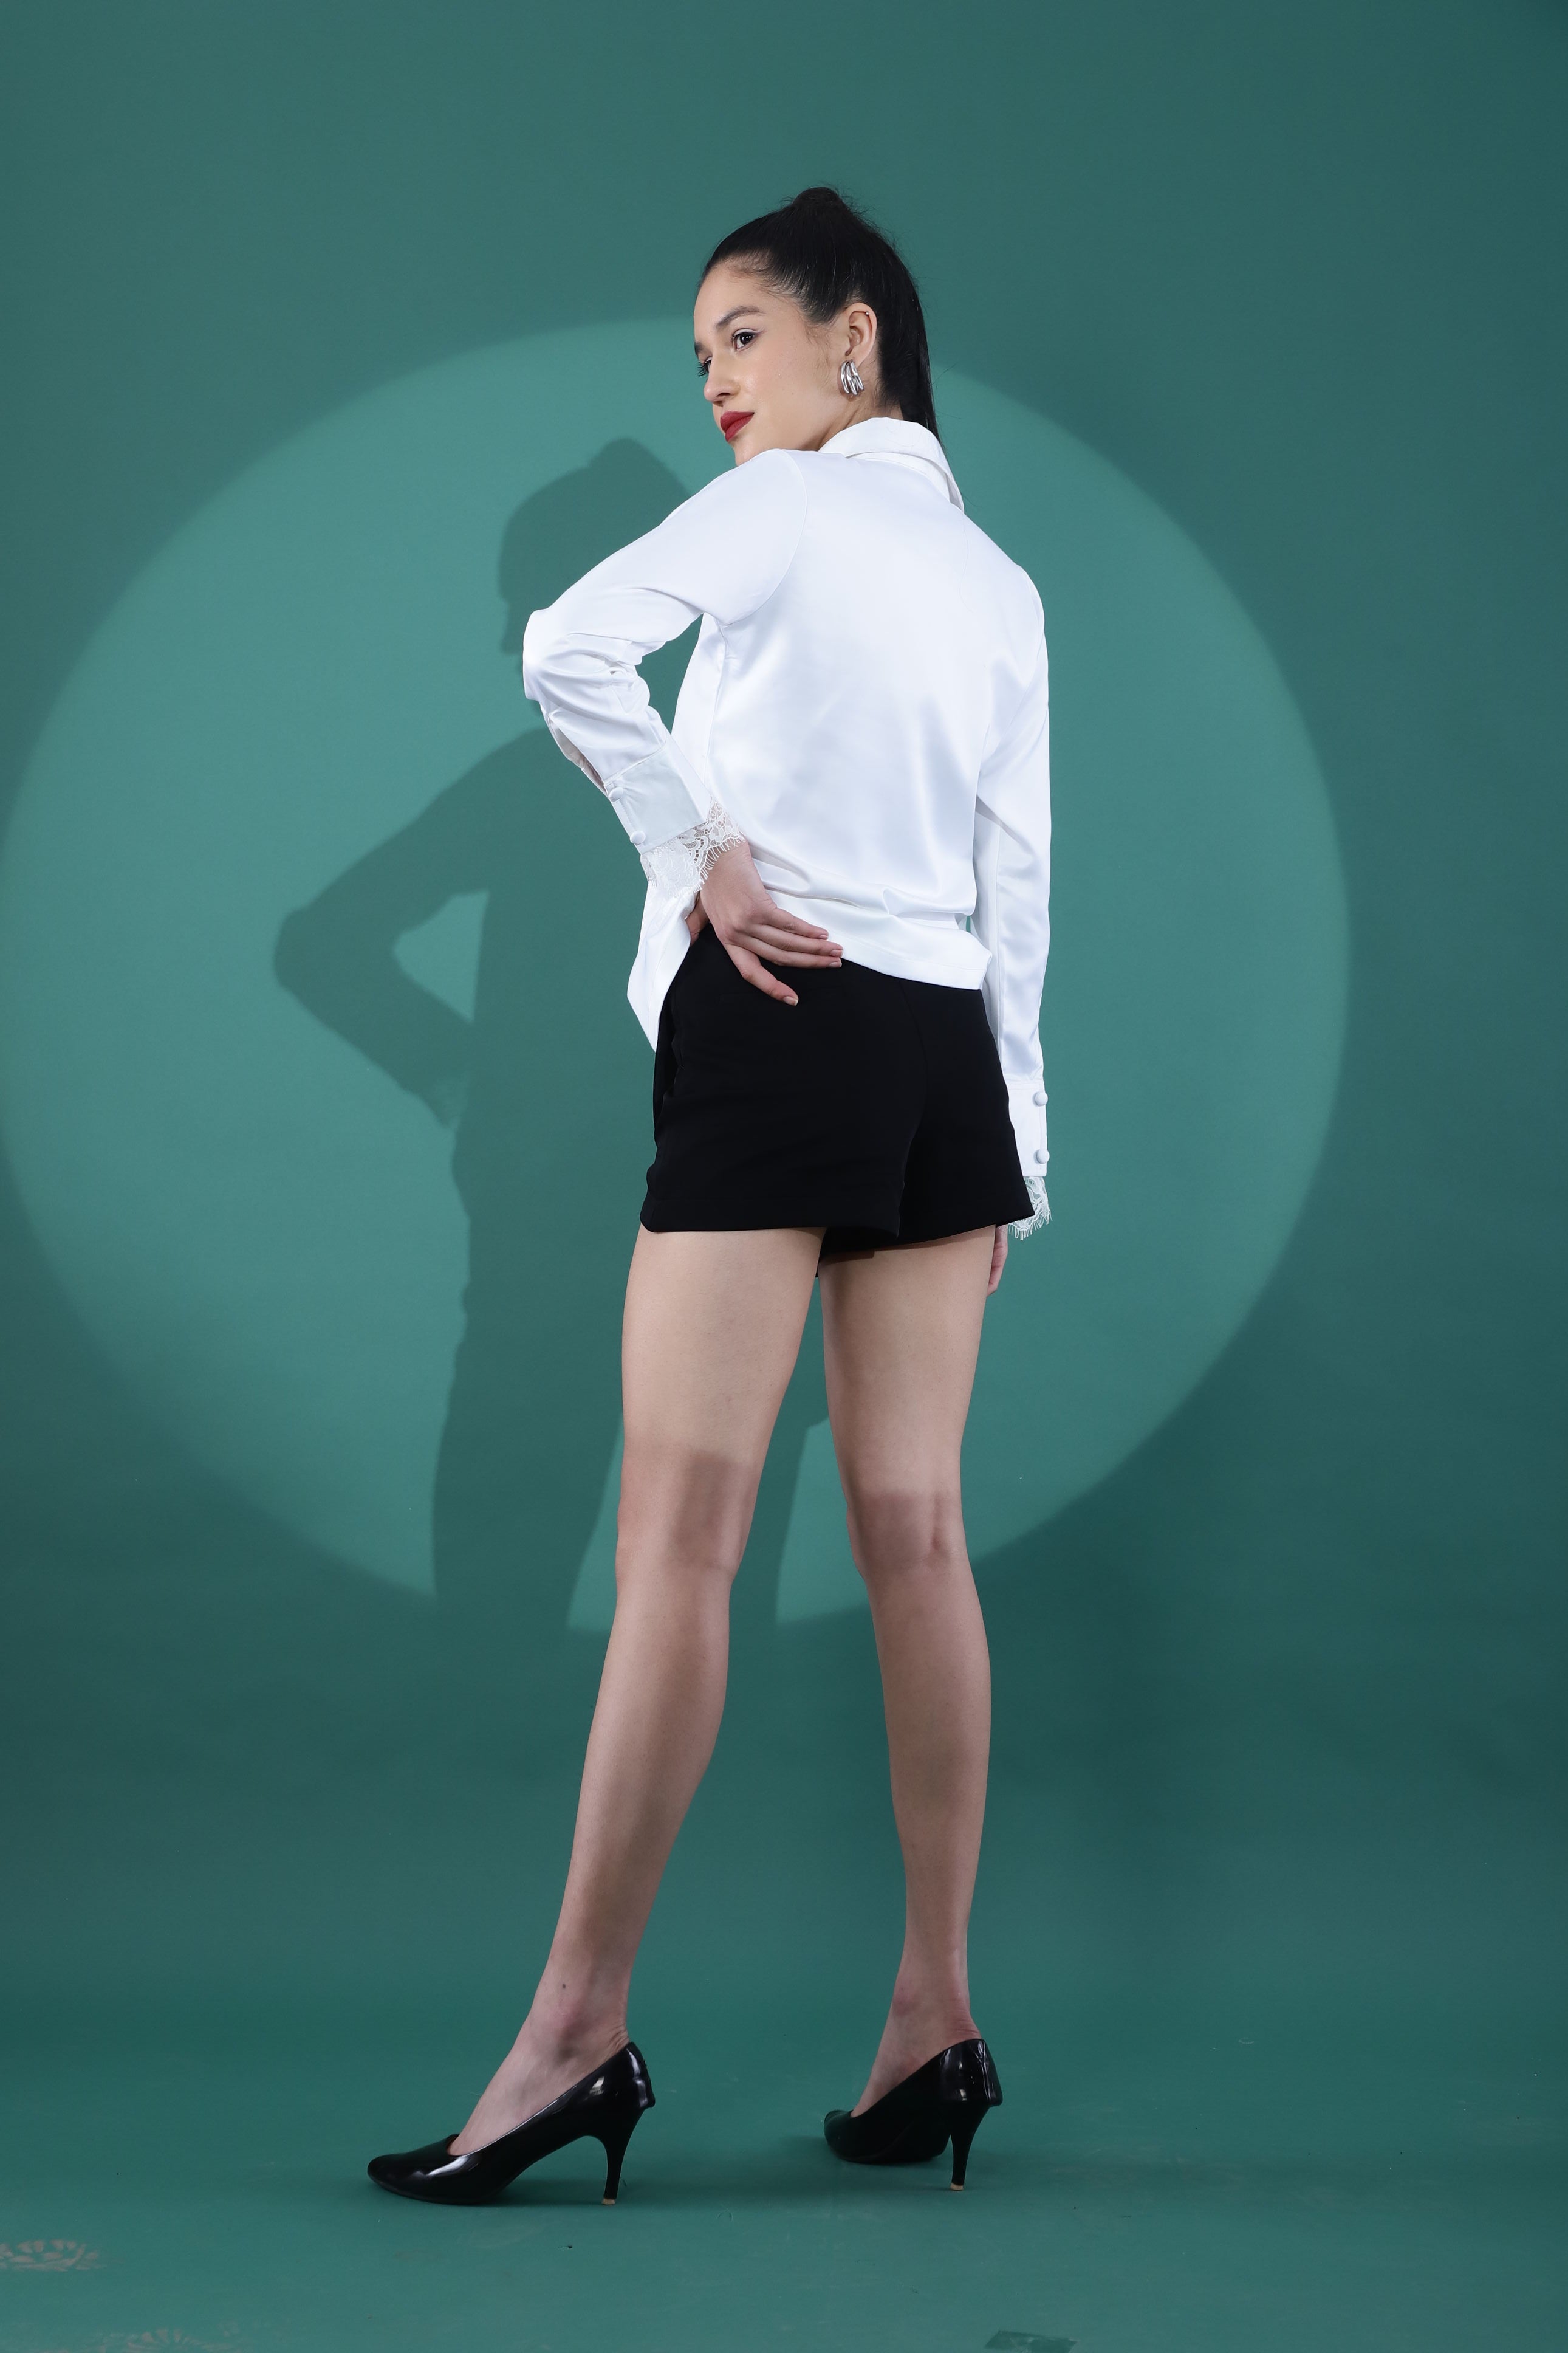 Women's White Solid Crop Top & Women's Black Solid Leggings